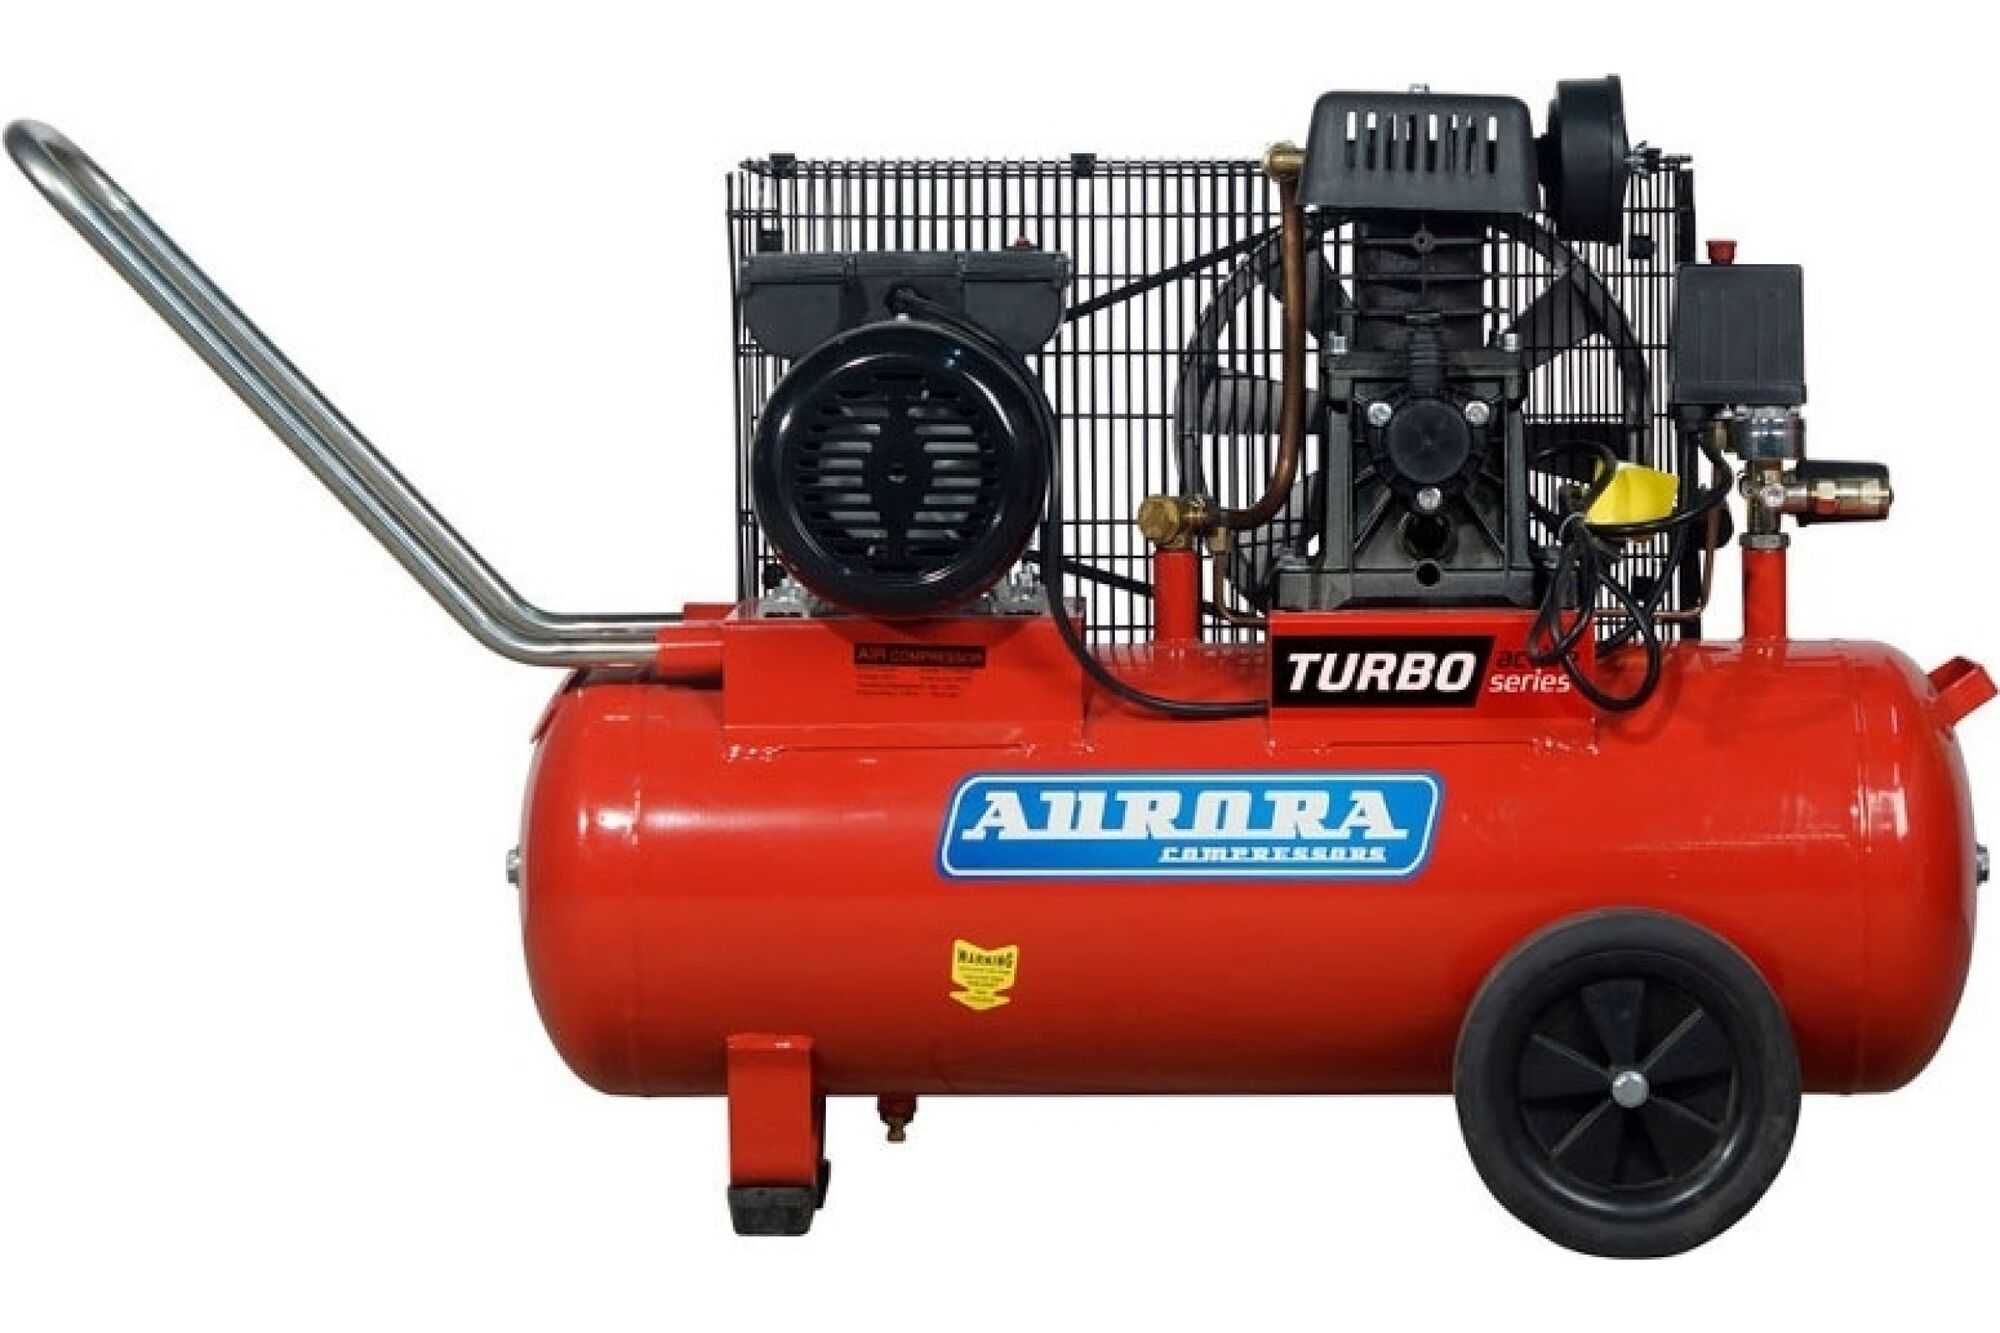 Компрессор Aurora STORM-50 TURBO active design 50 л, 360 л/мин, 2,2 кВт, 10бар, 220 В 32053